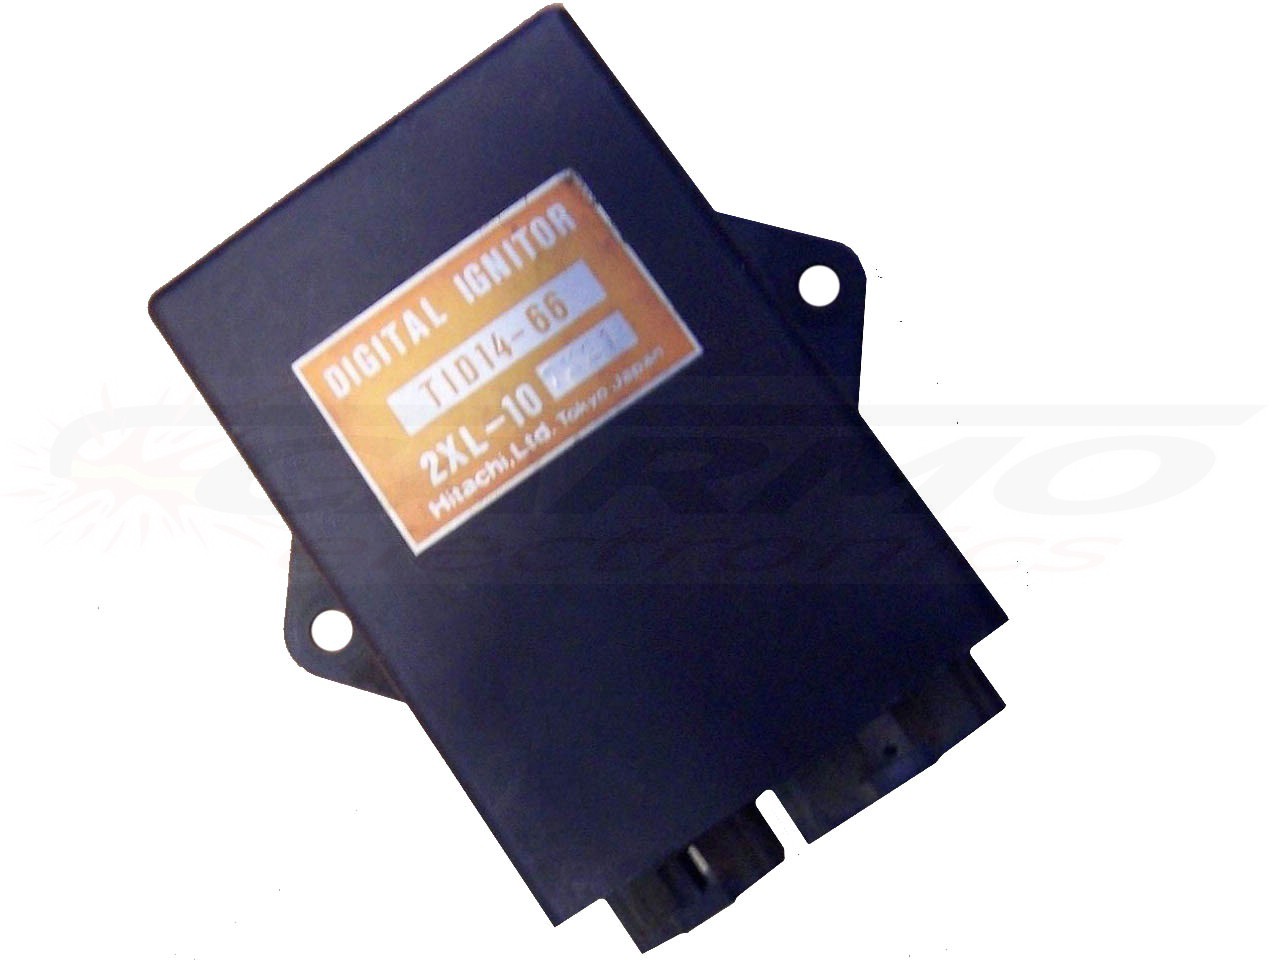 FZ600 TCI CDI dispositif de commande boîte noire (TID14-66, 2XL-10)